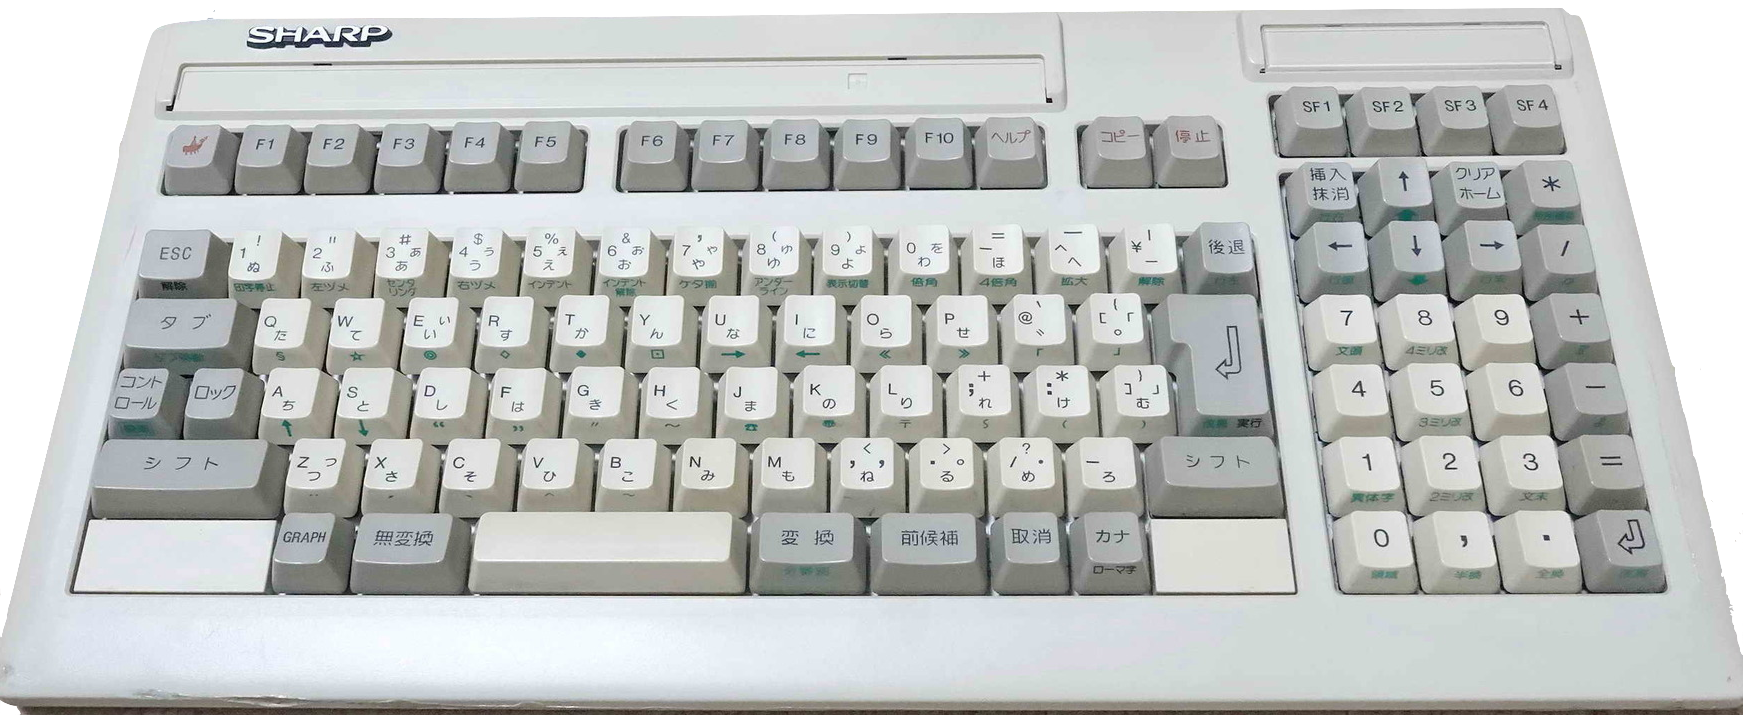 MZ-2800 Keyboard